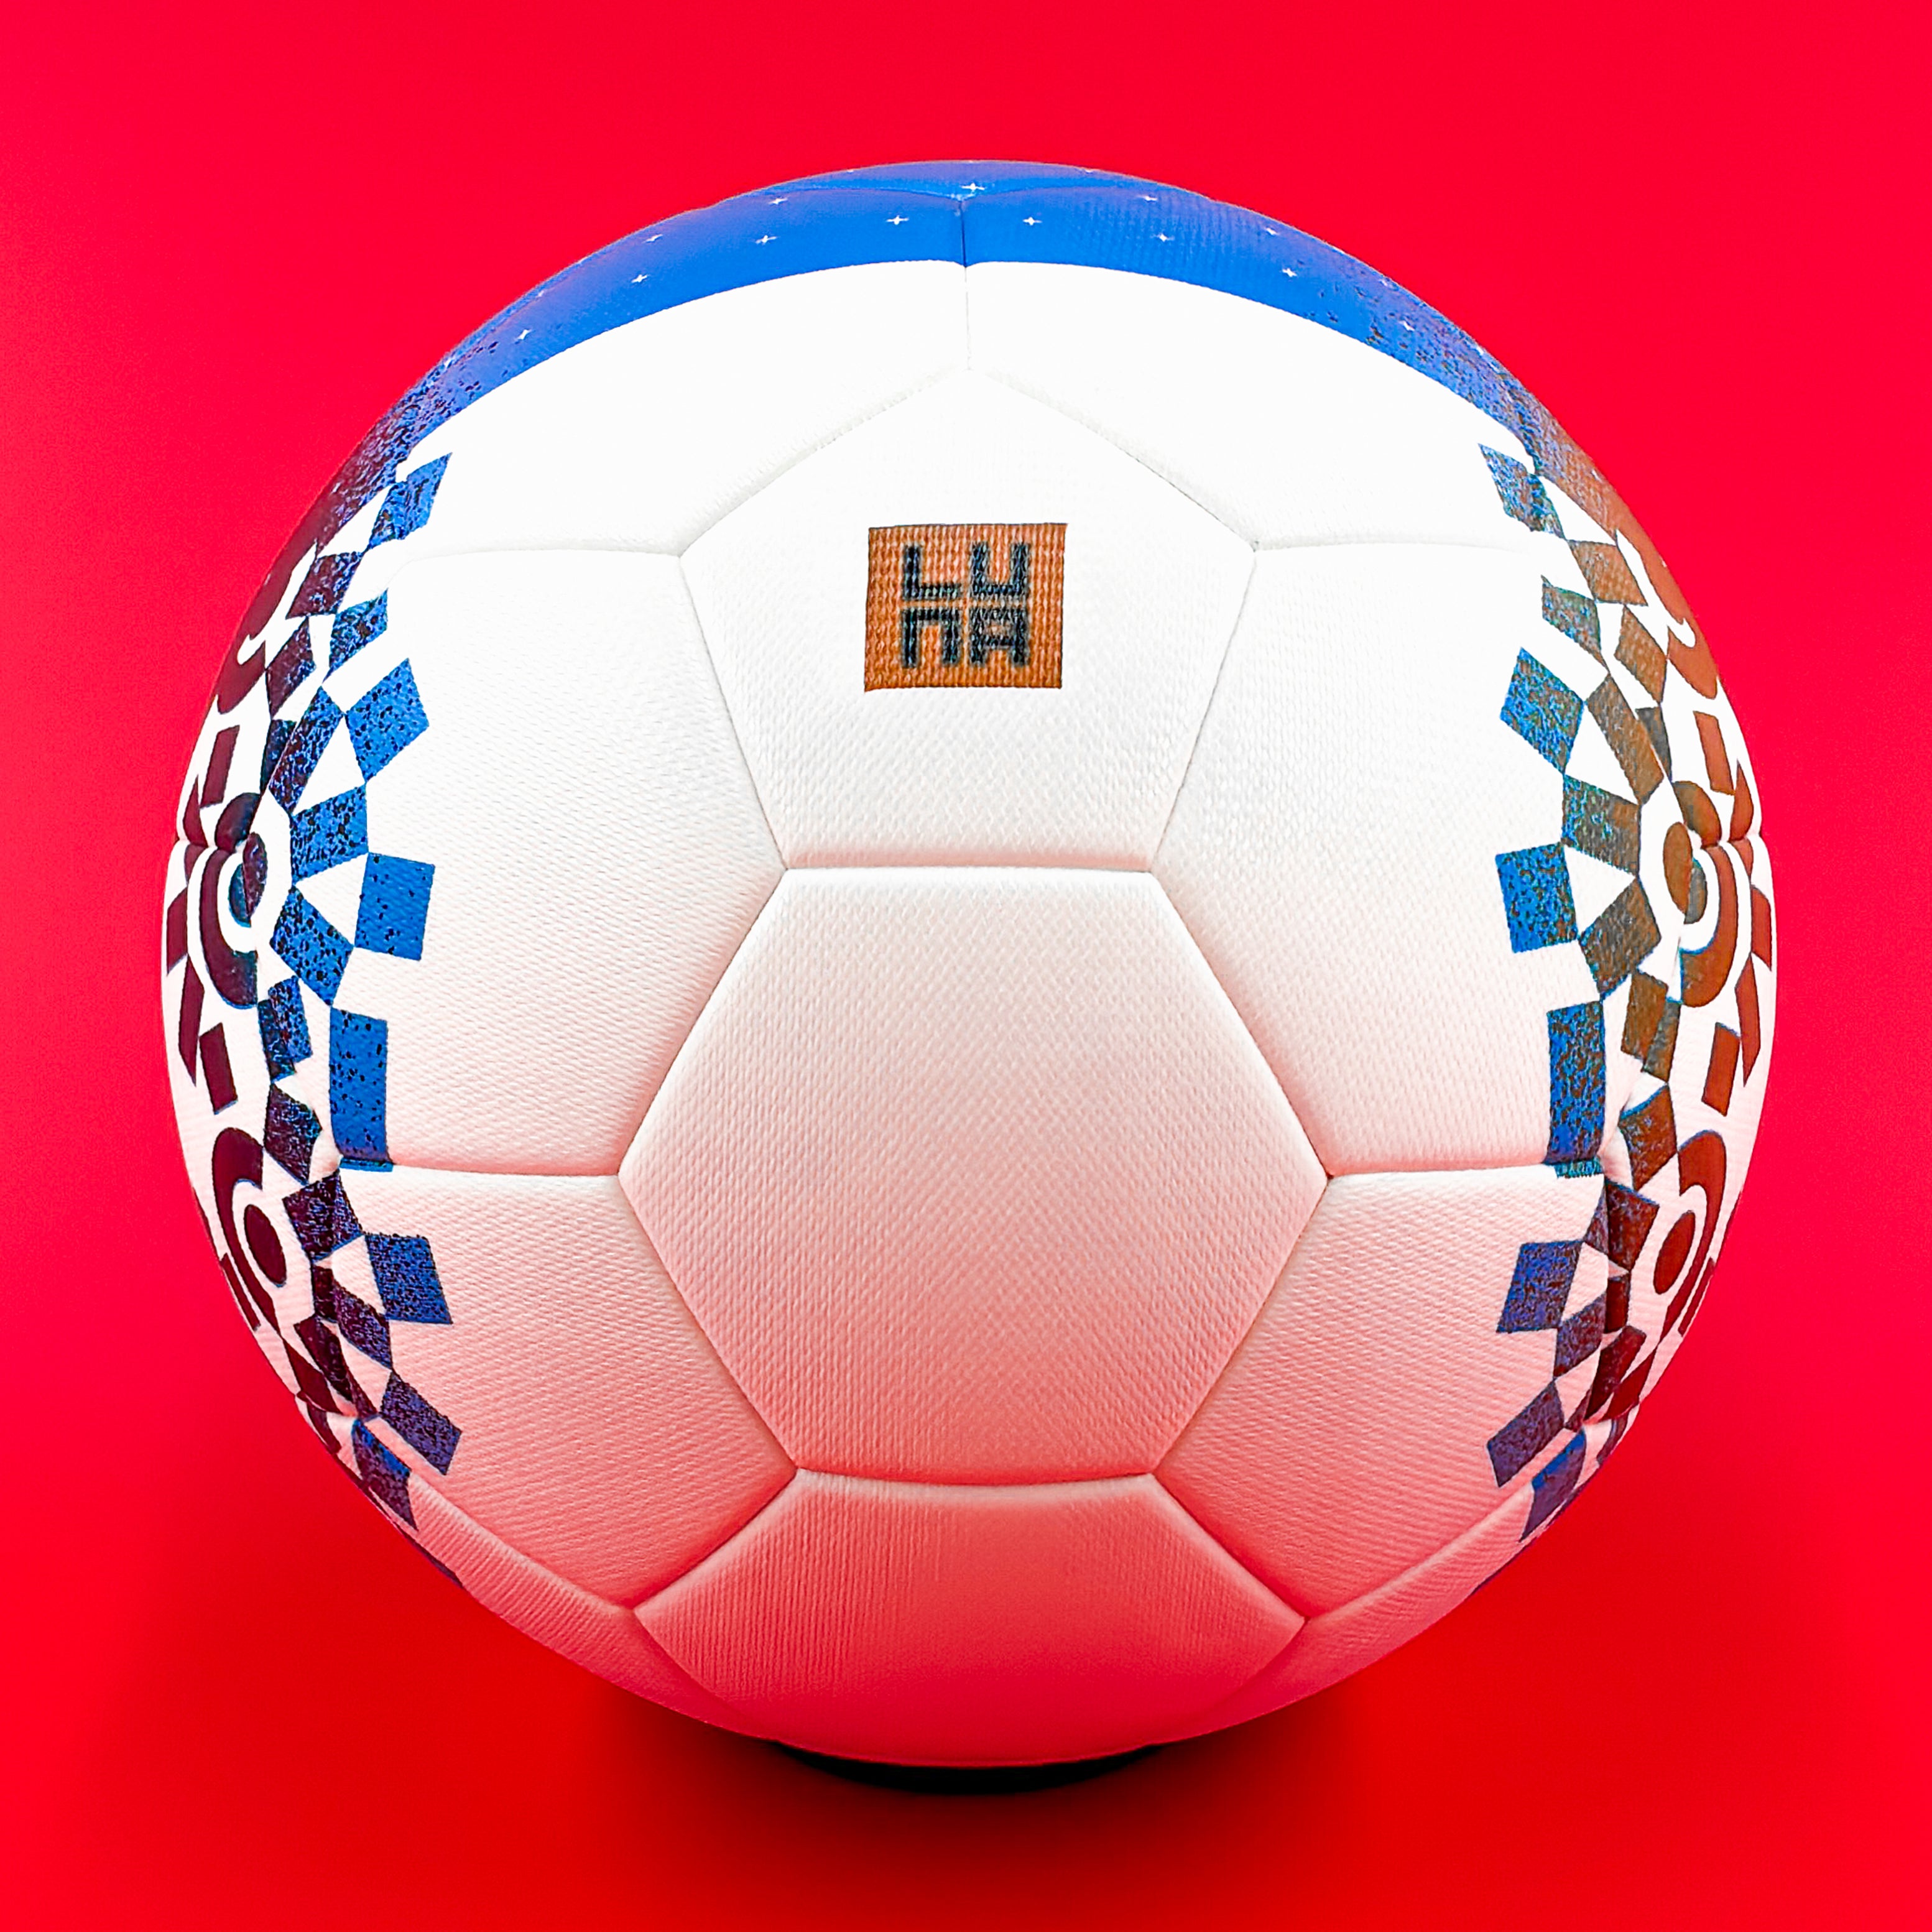 Luna Futsal Ball - Colligo